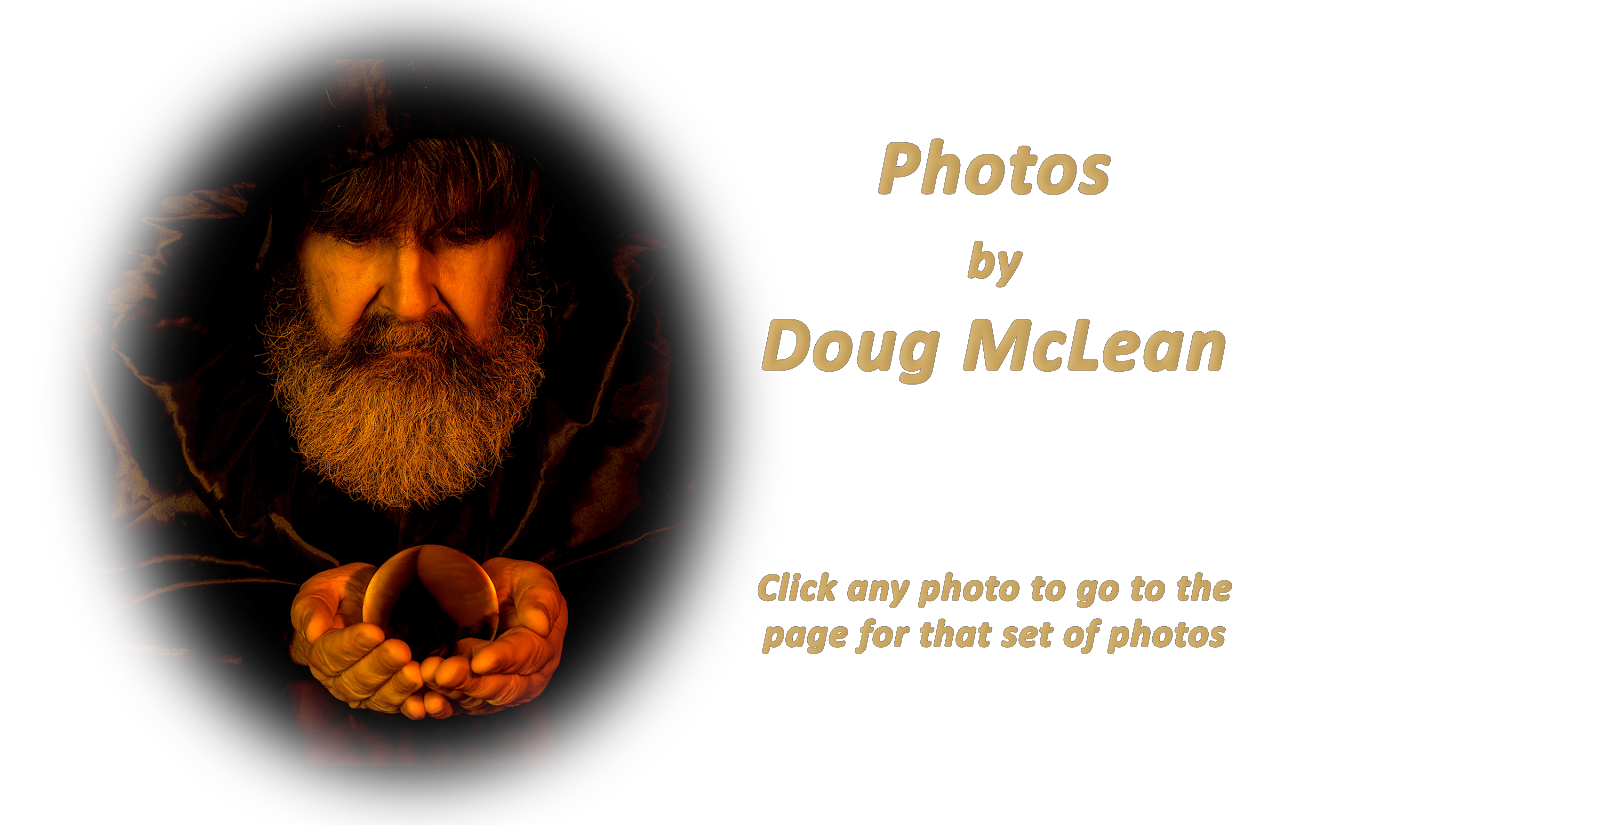 Photos by Doug McLean